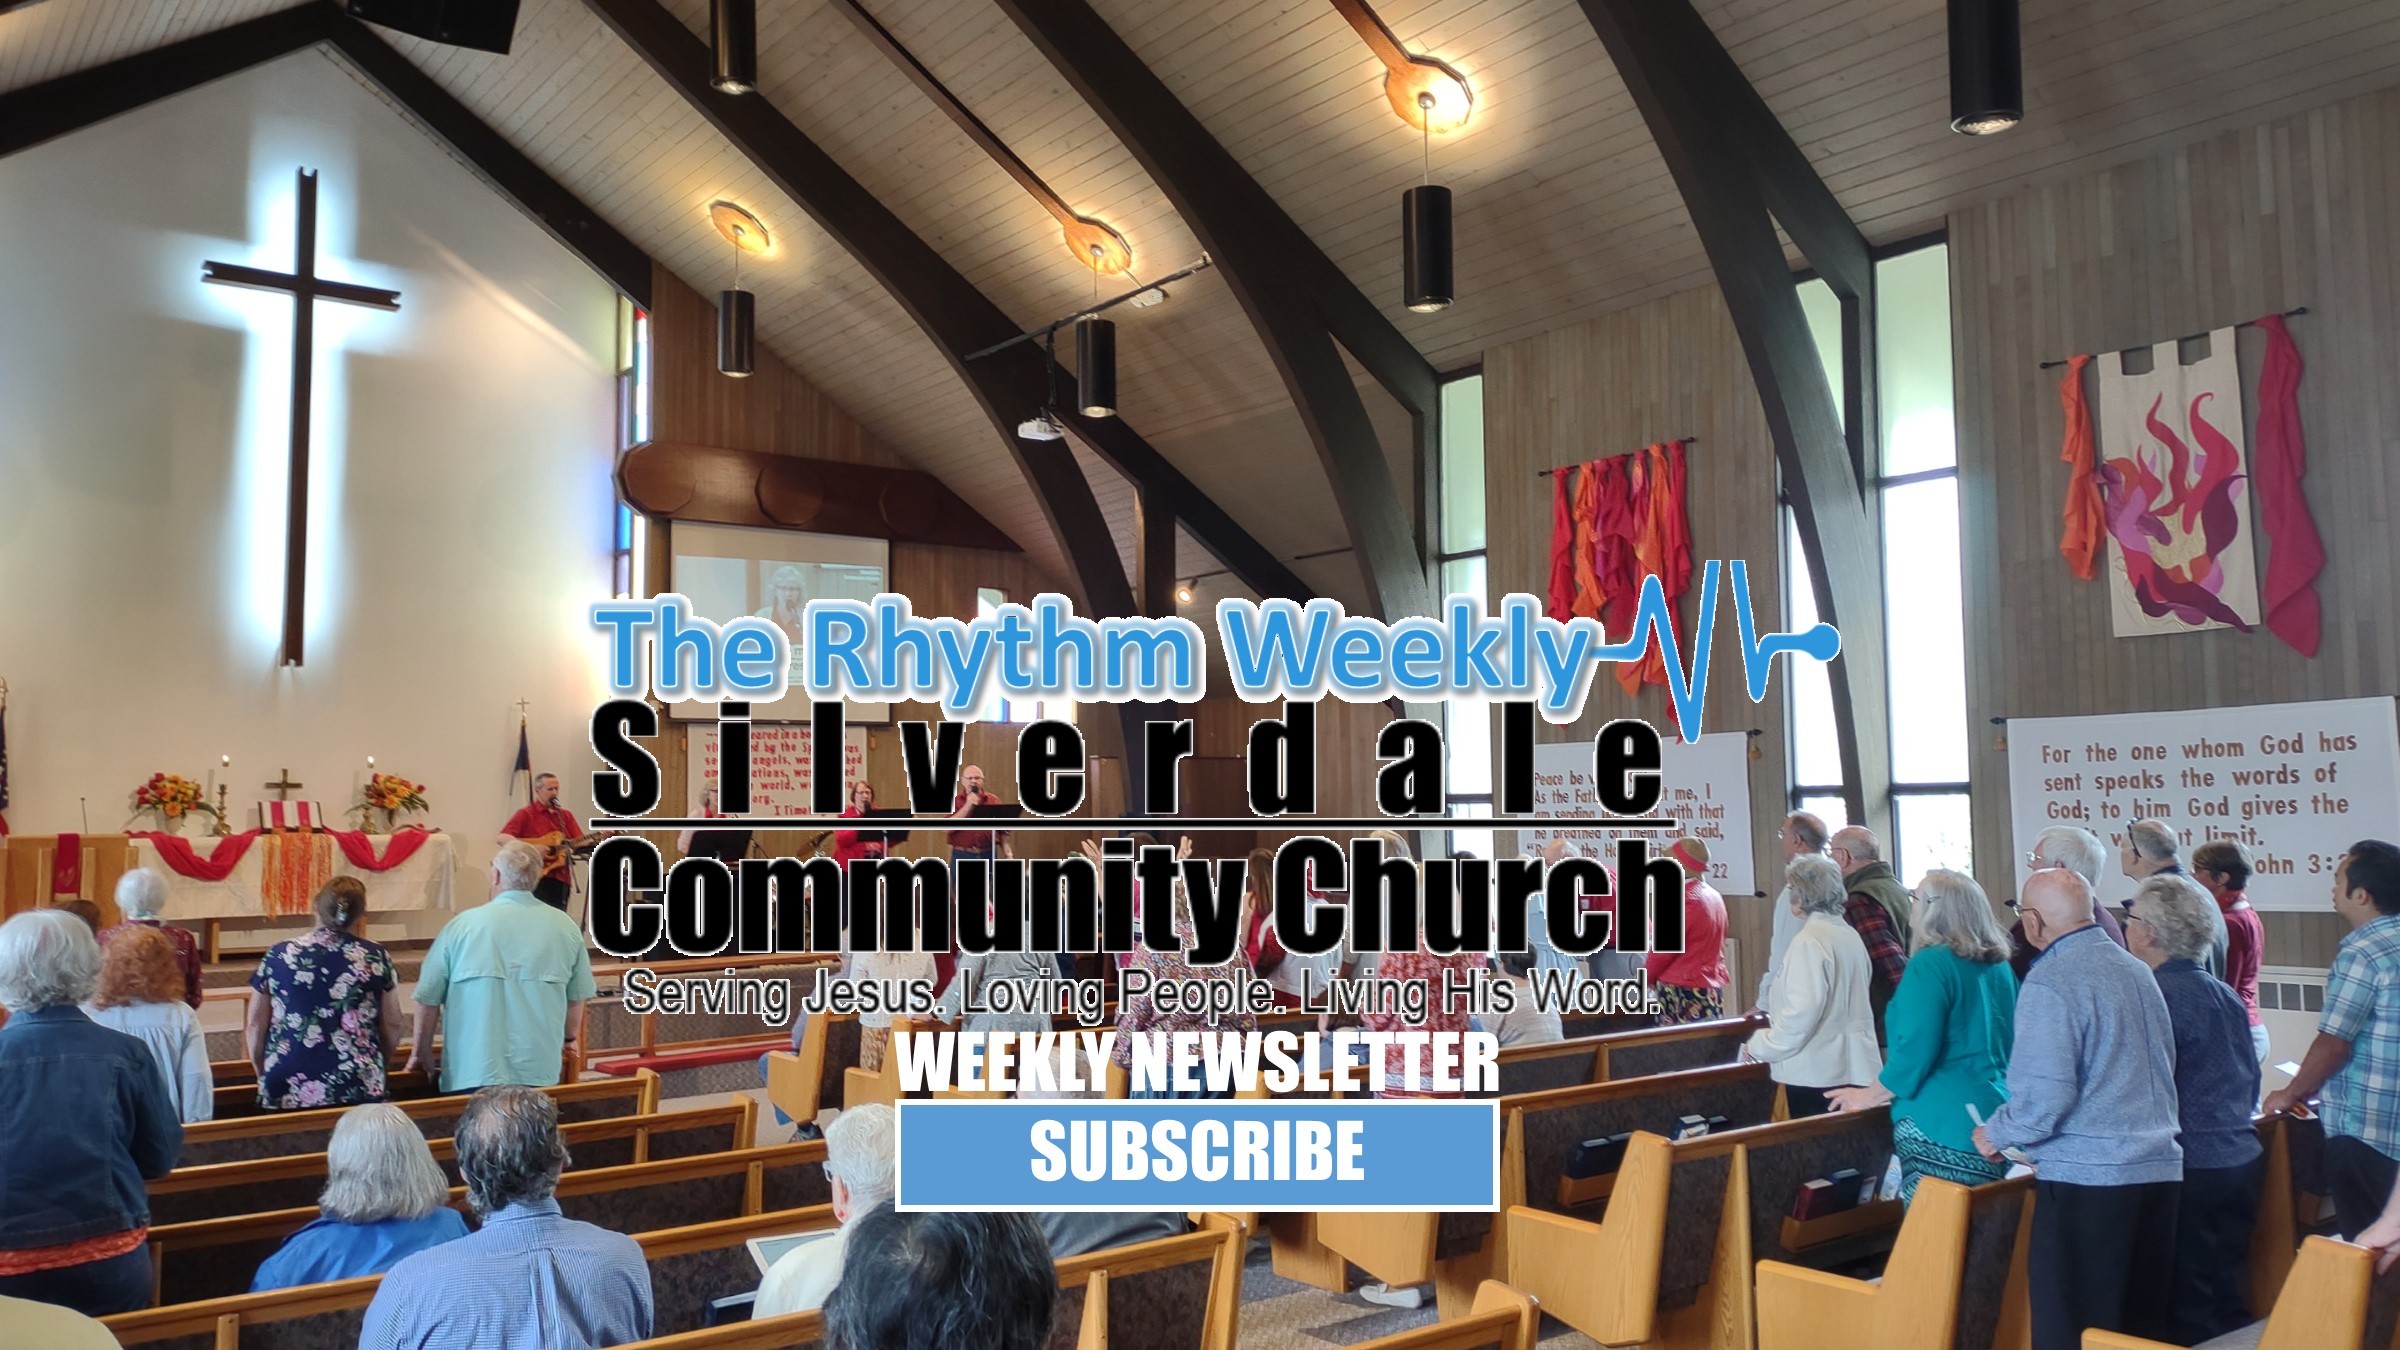 silverdale community church, newsletter, 